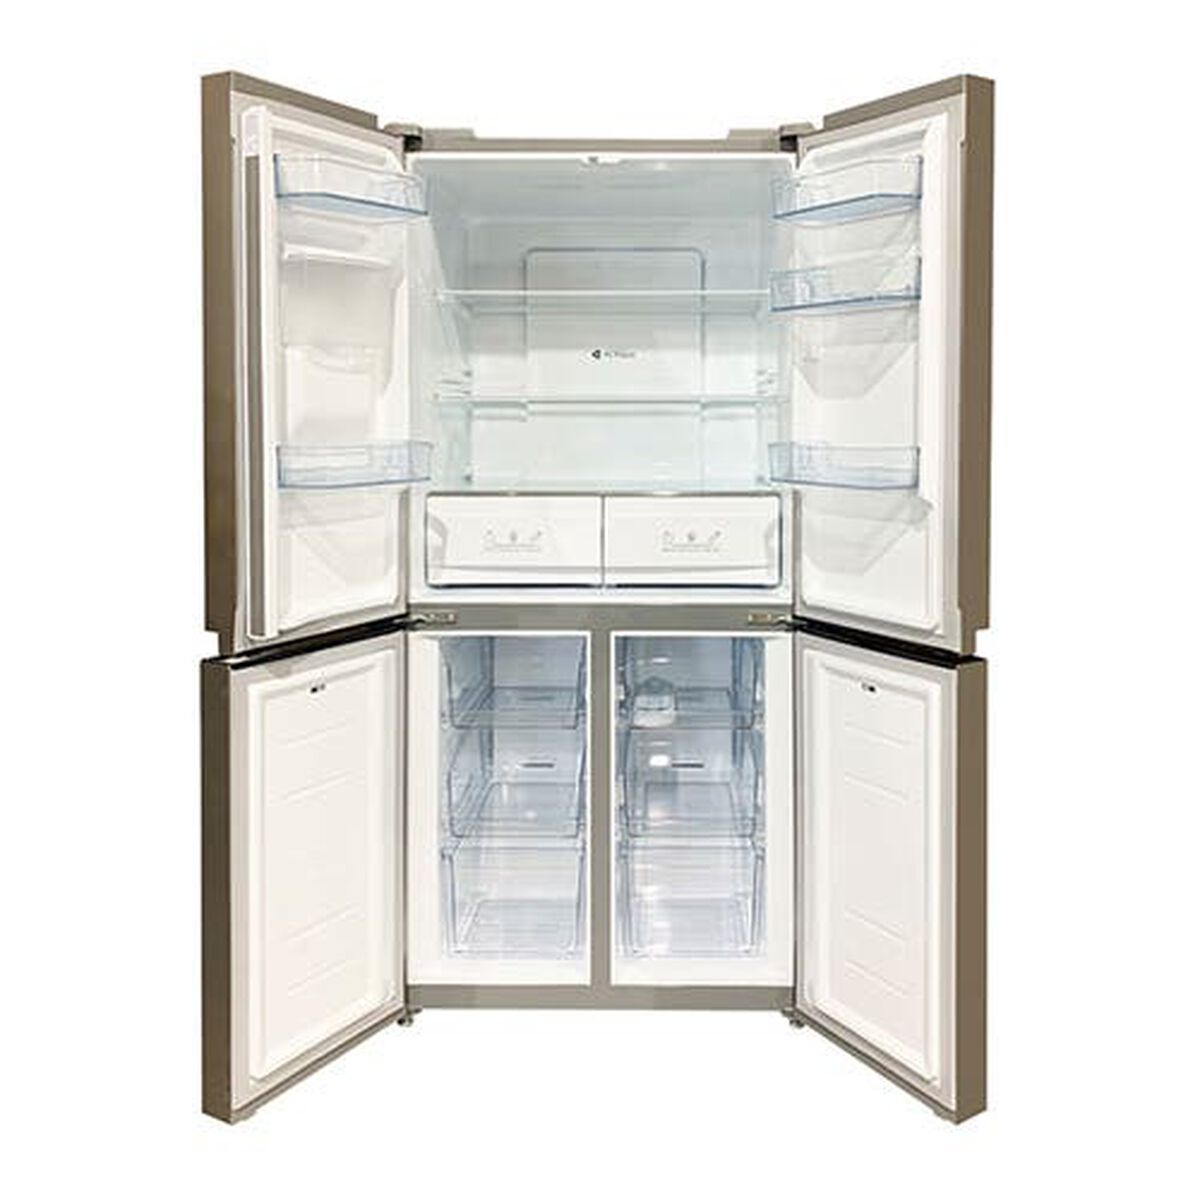 Refrigerador Side by Side Maigas HQ-627WEN 467 lts.